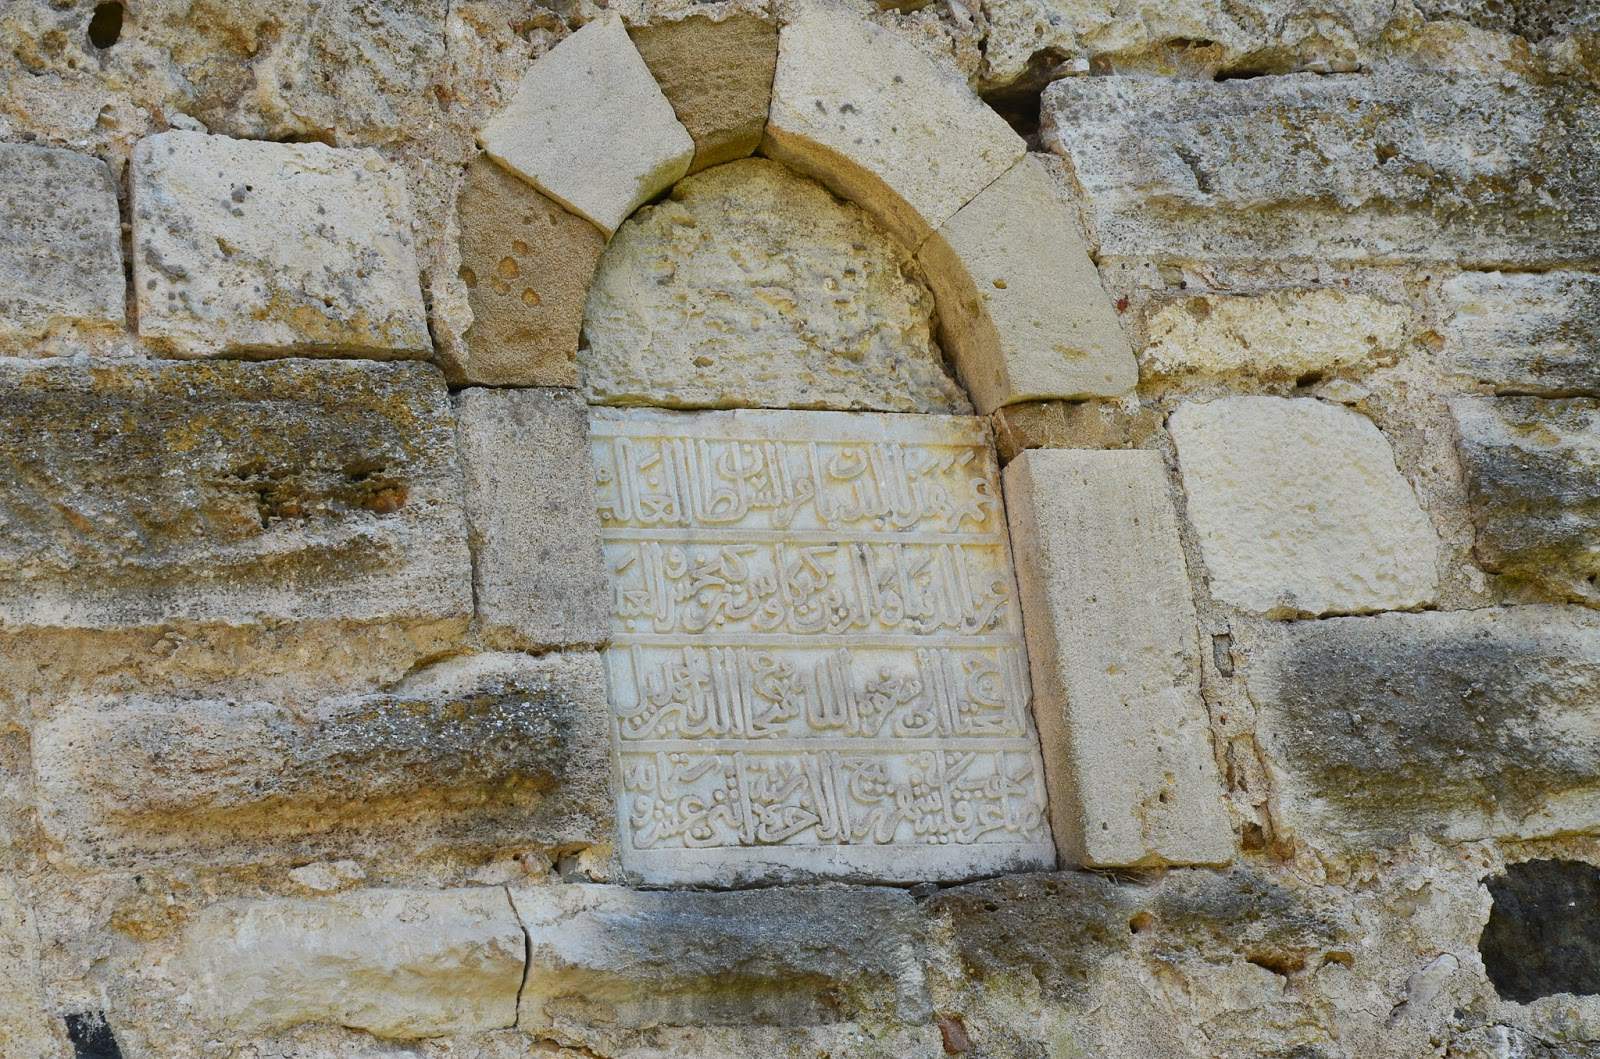 Seljuk plaque at Sinop Cezaevi in Sinop, Turkey